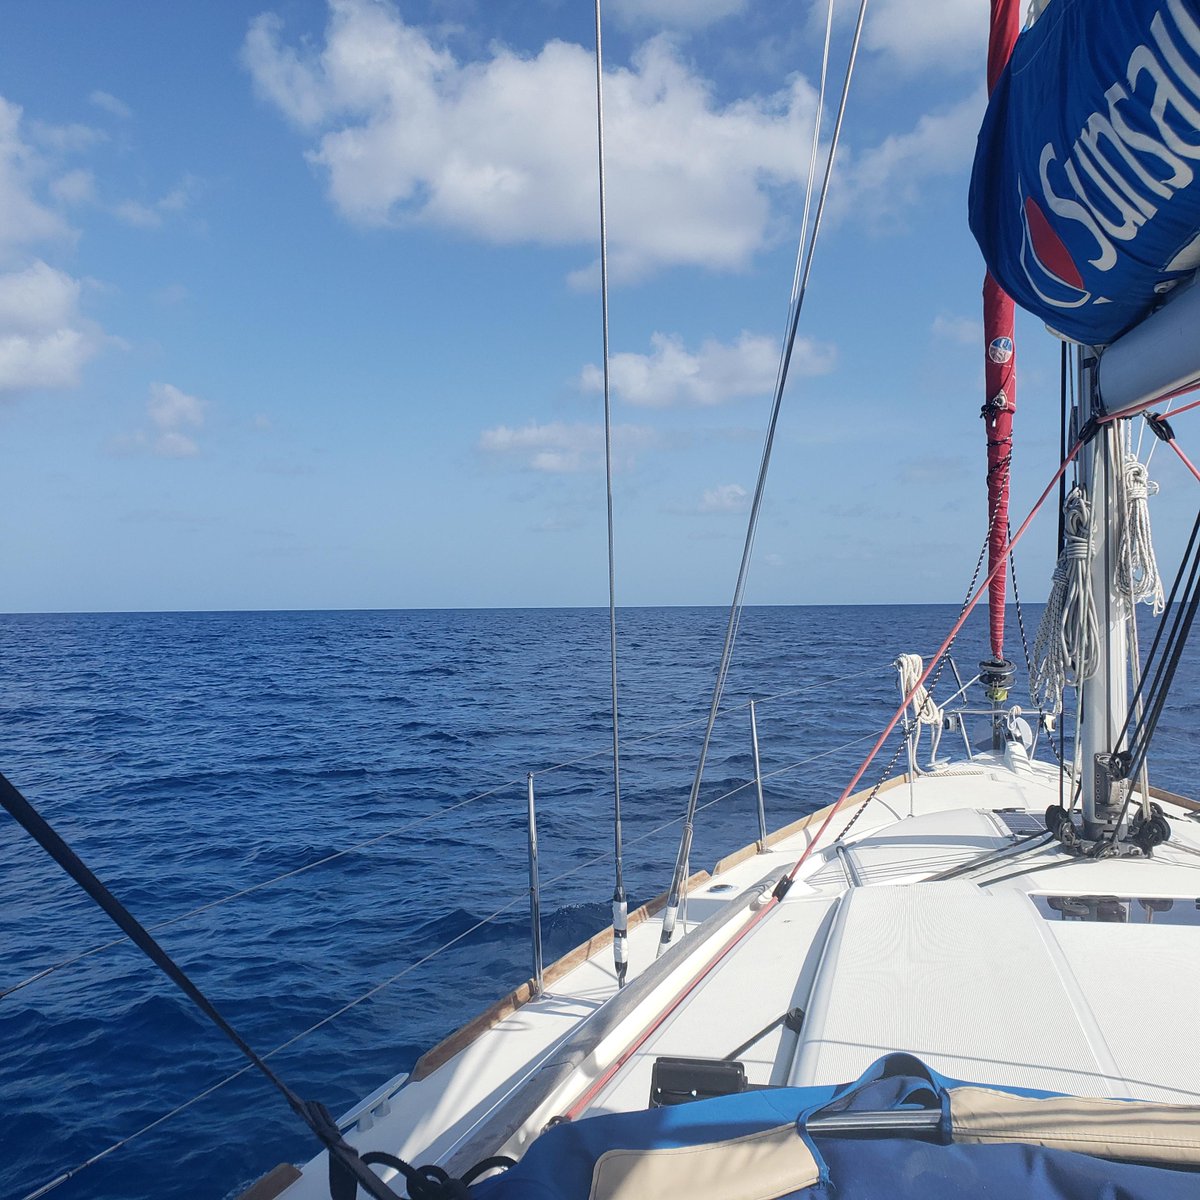 Endless adventures ⛵️

📸 Edward P.
#sailing #sailboat #bvi #sunsail